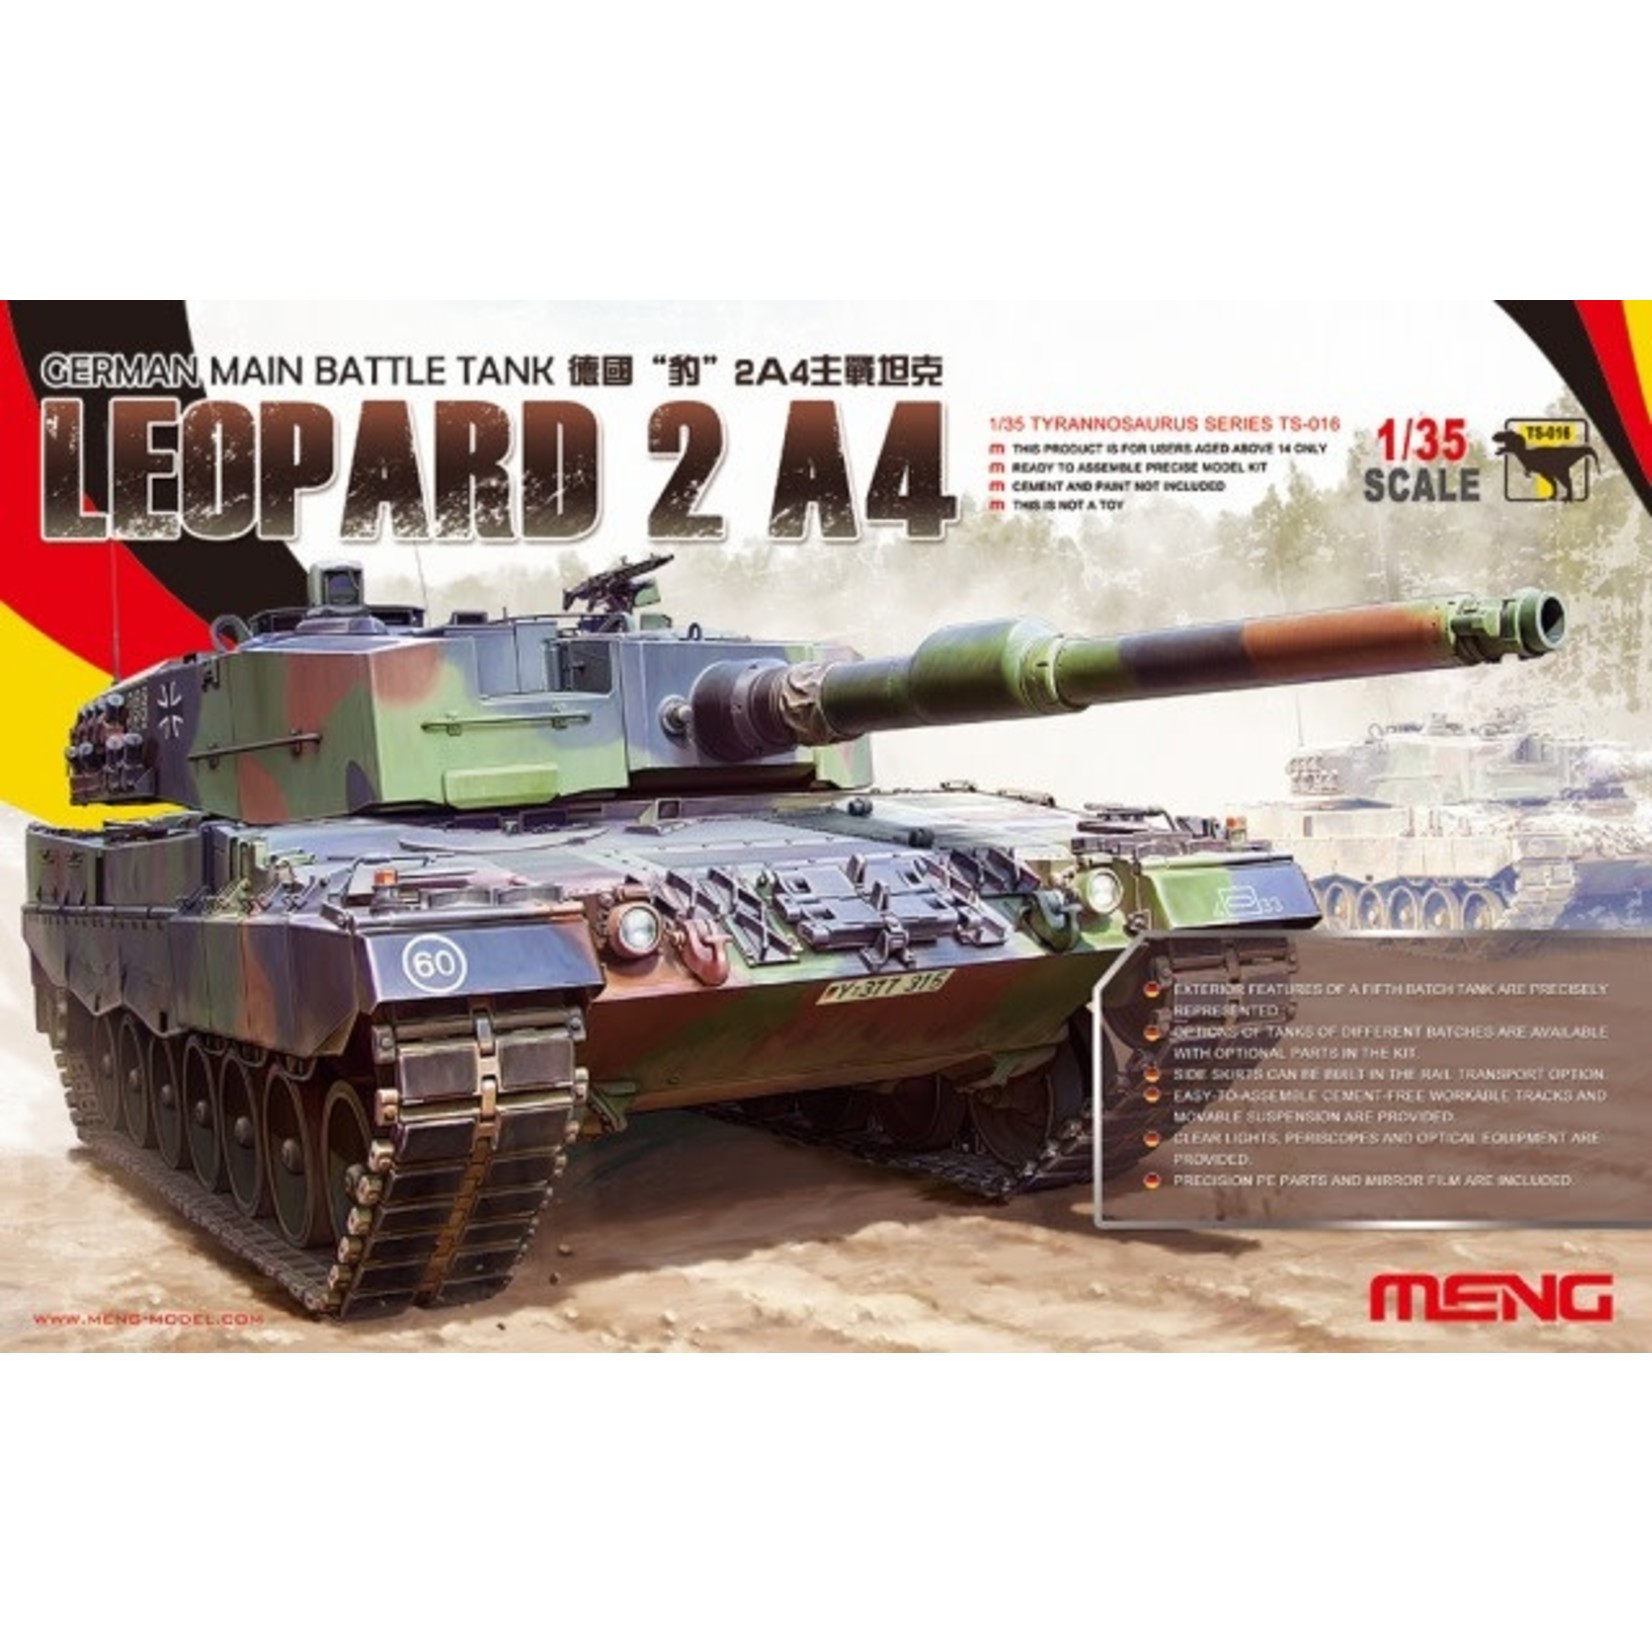 MENG MENGTS016: German MBT Leopard 2